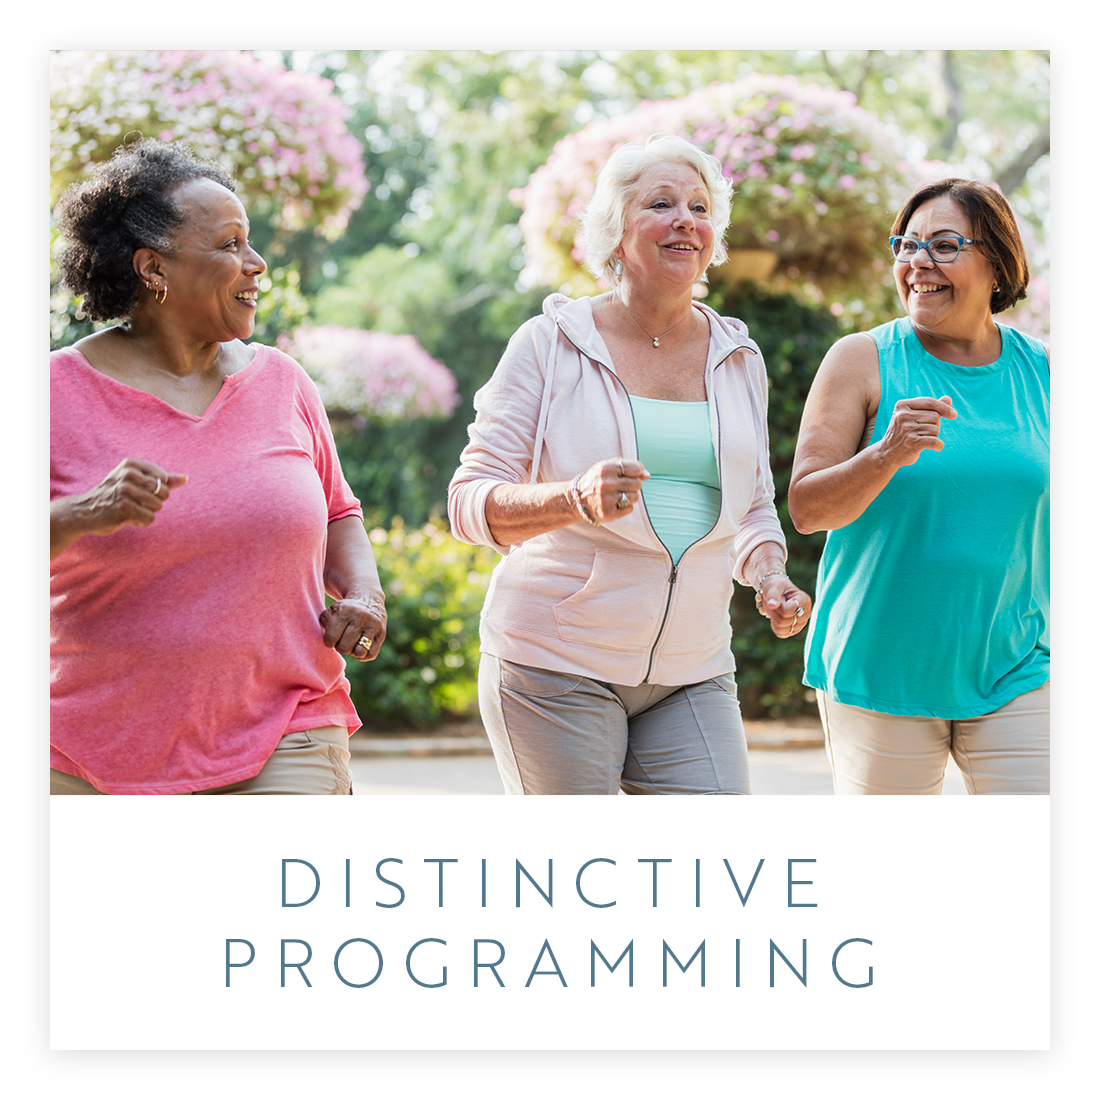 View our Distinctive programs at Estancia Senior Living in Fallbrook, California